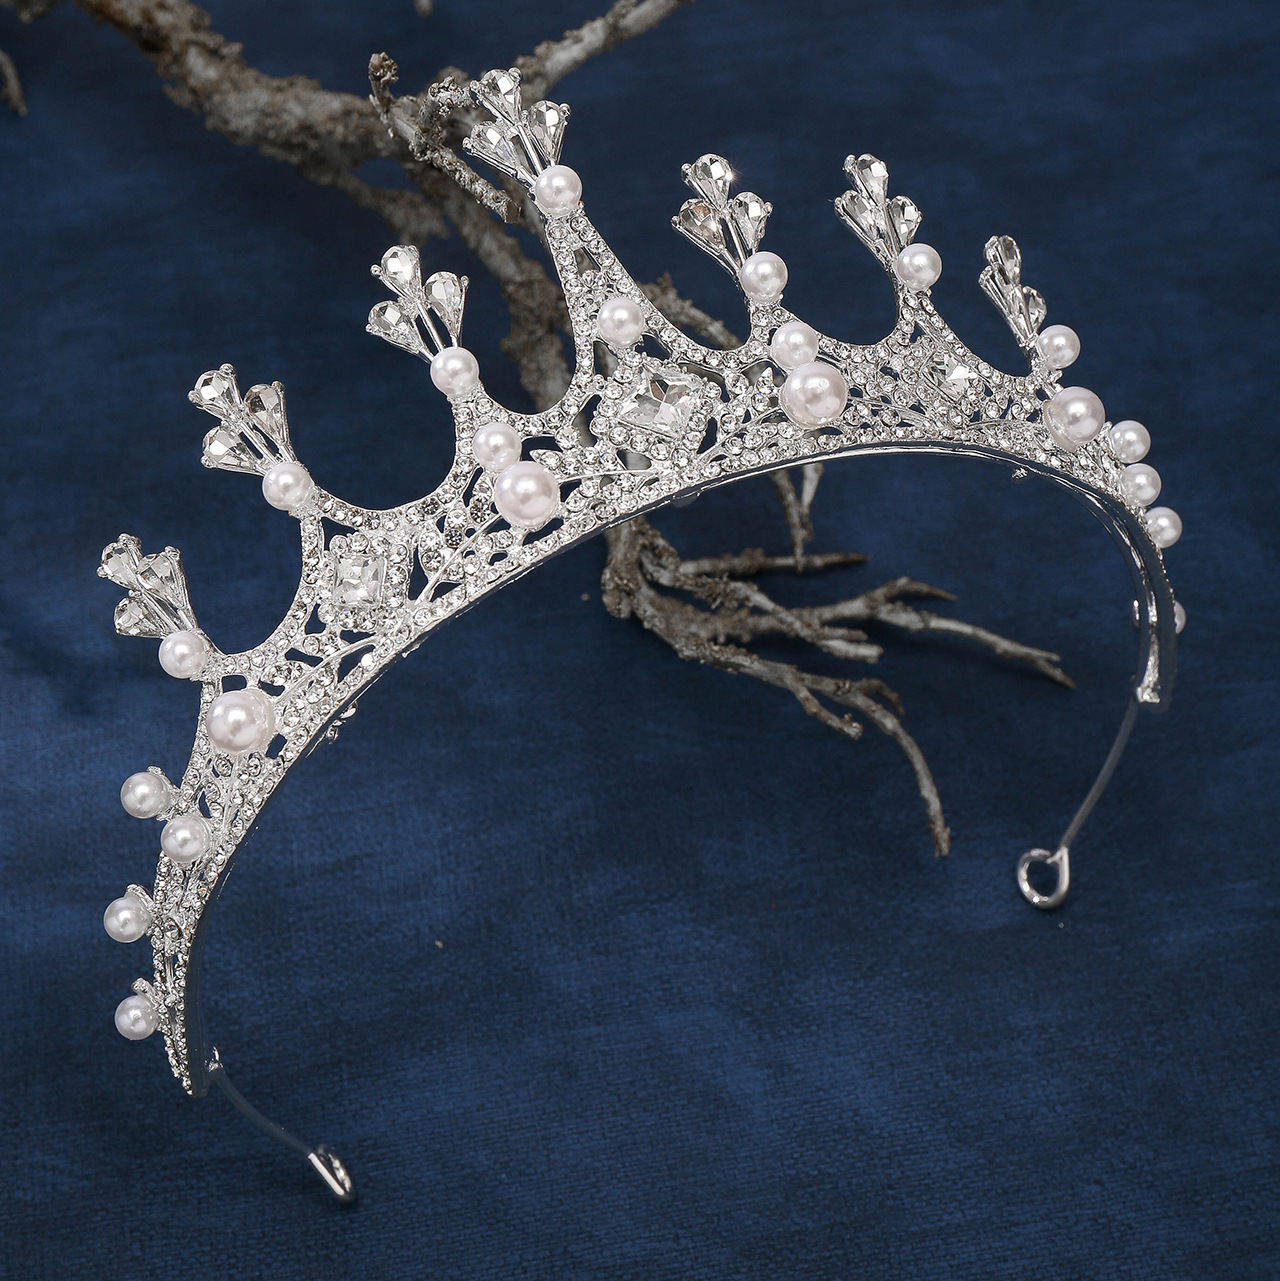 1:Silver Princess tiara